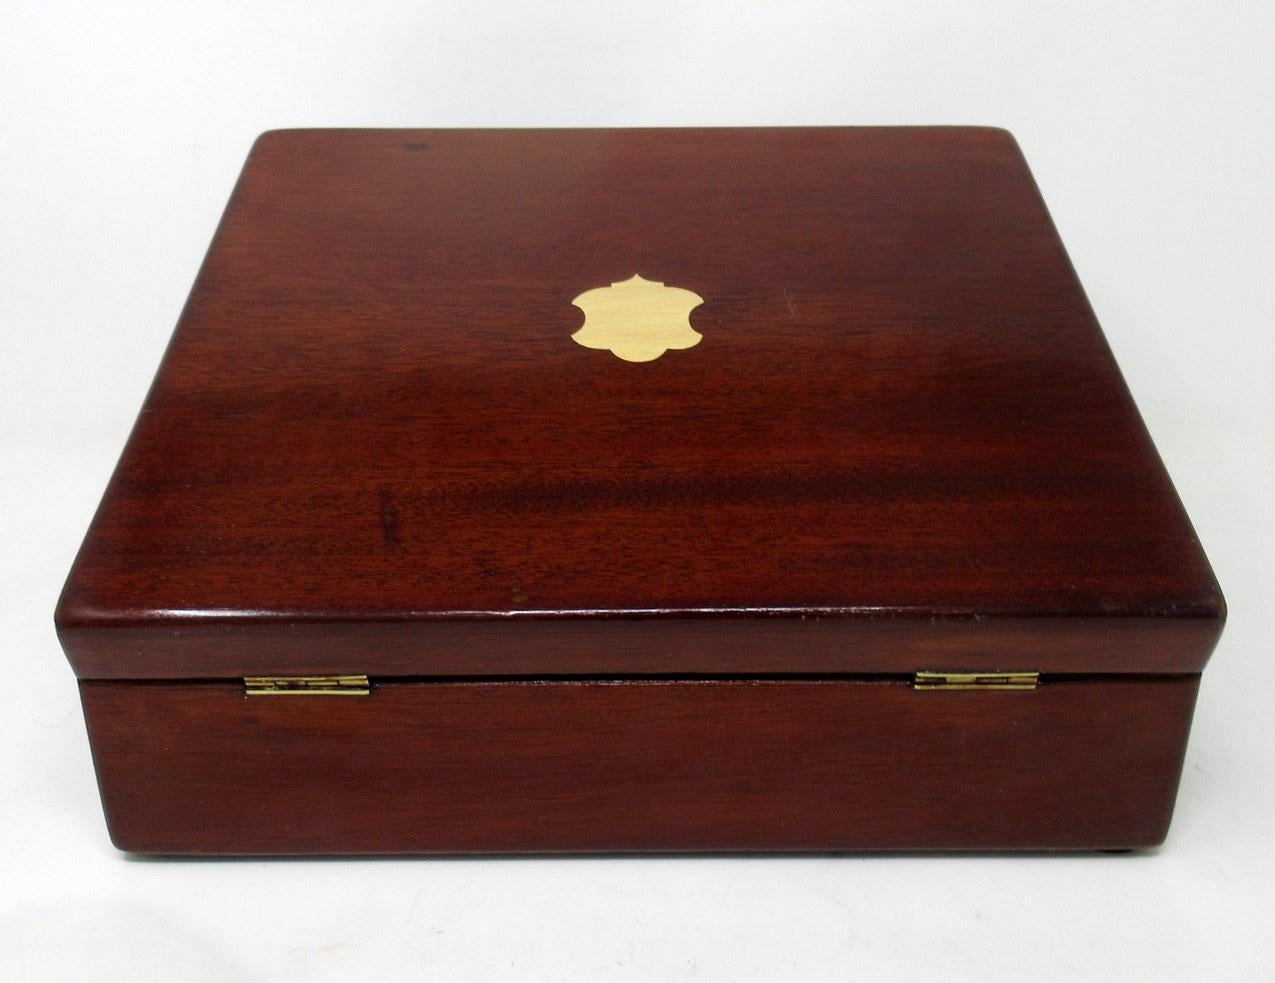 Edwardian Antique Vintage Mahogany Wooden Jewelry or Gentleman's Cigar Box Casket